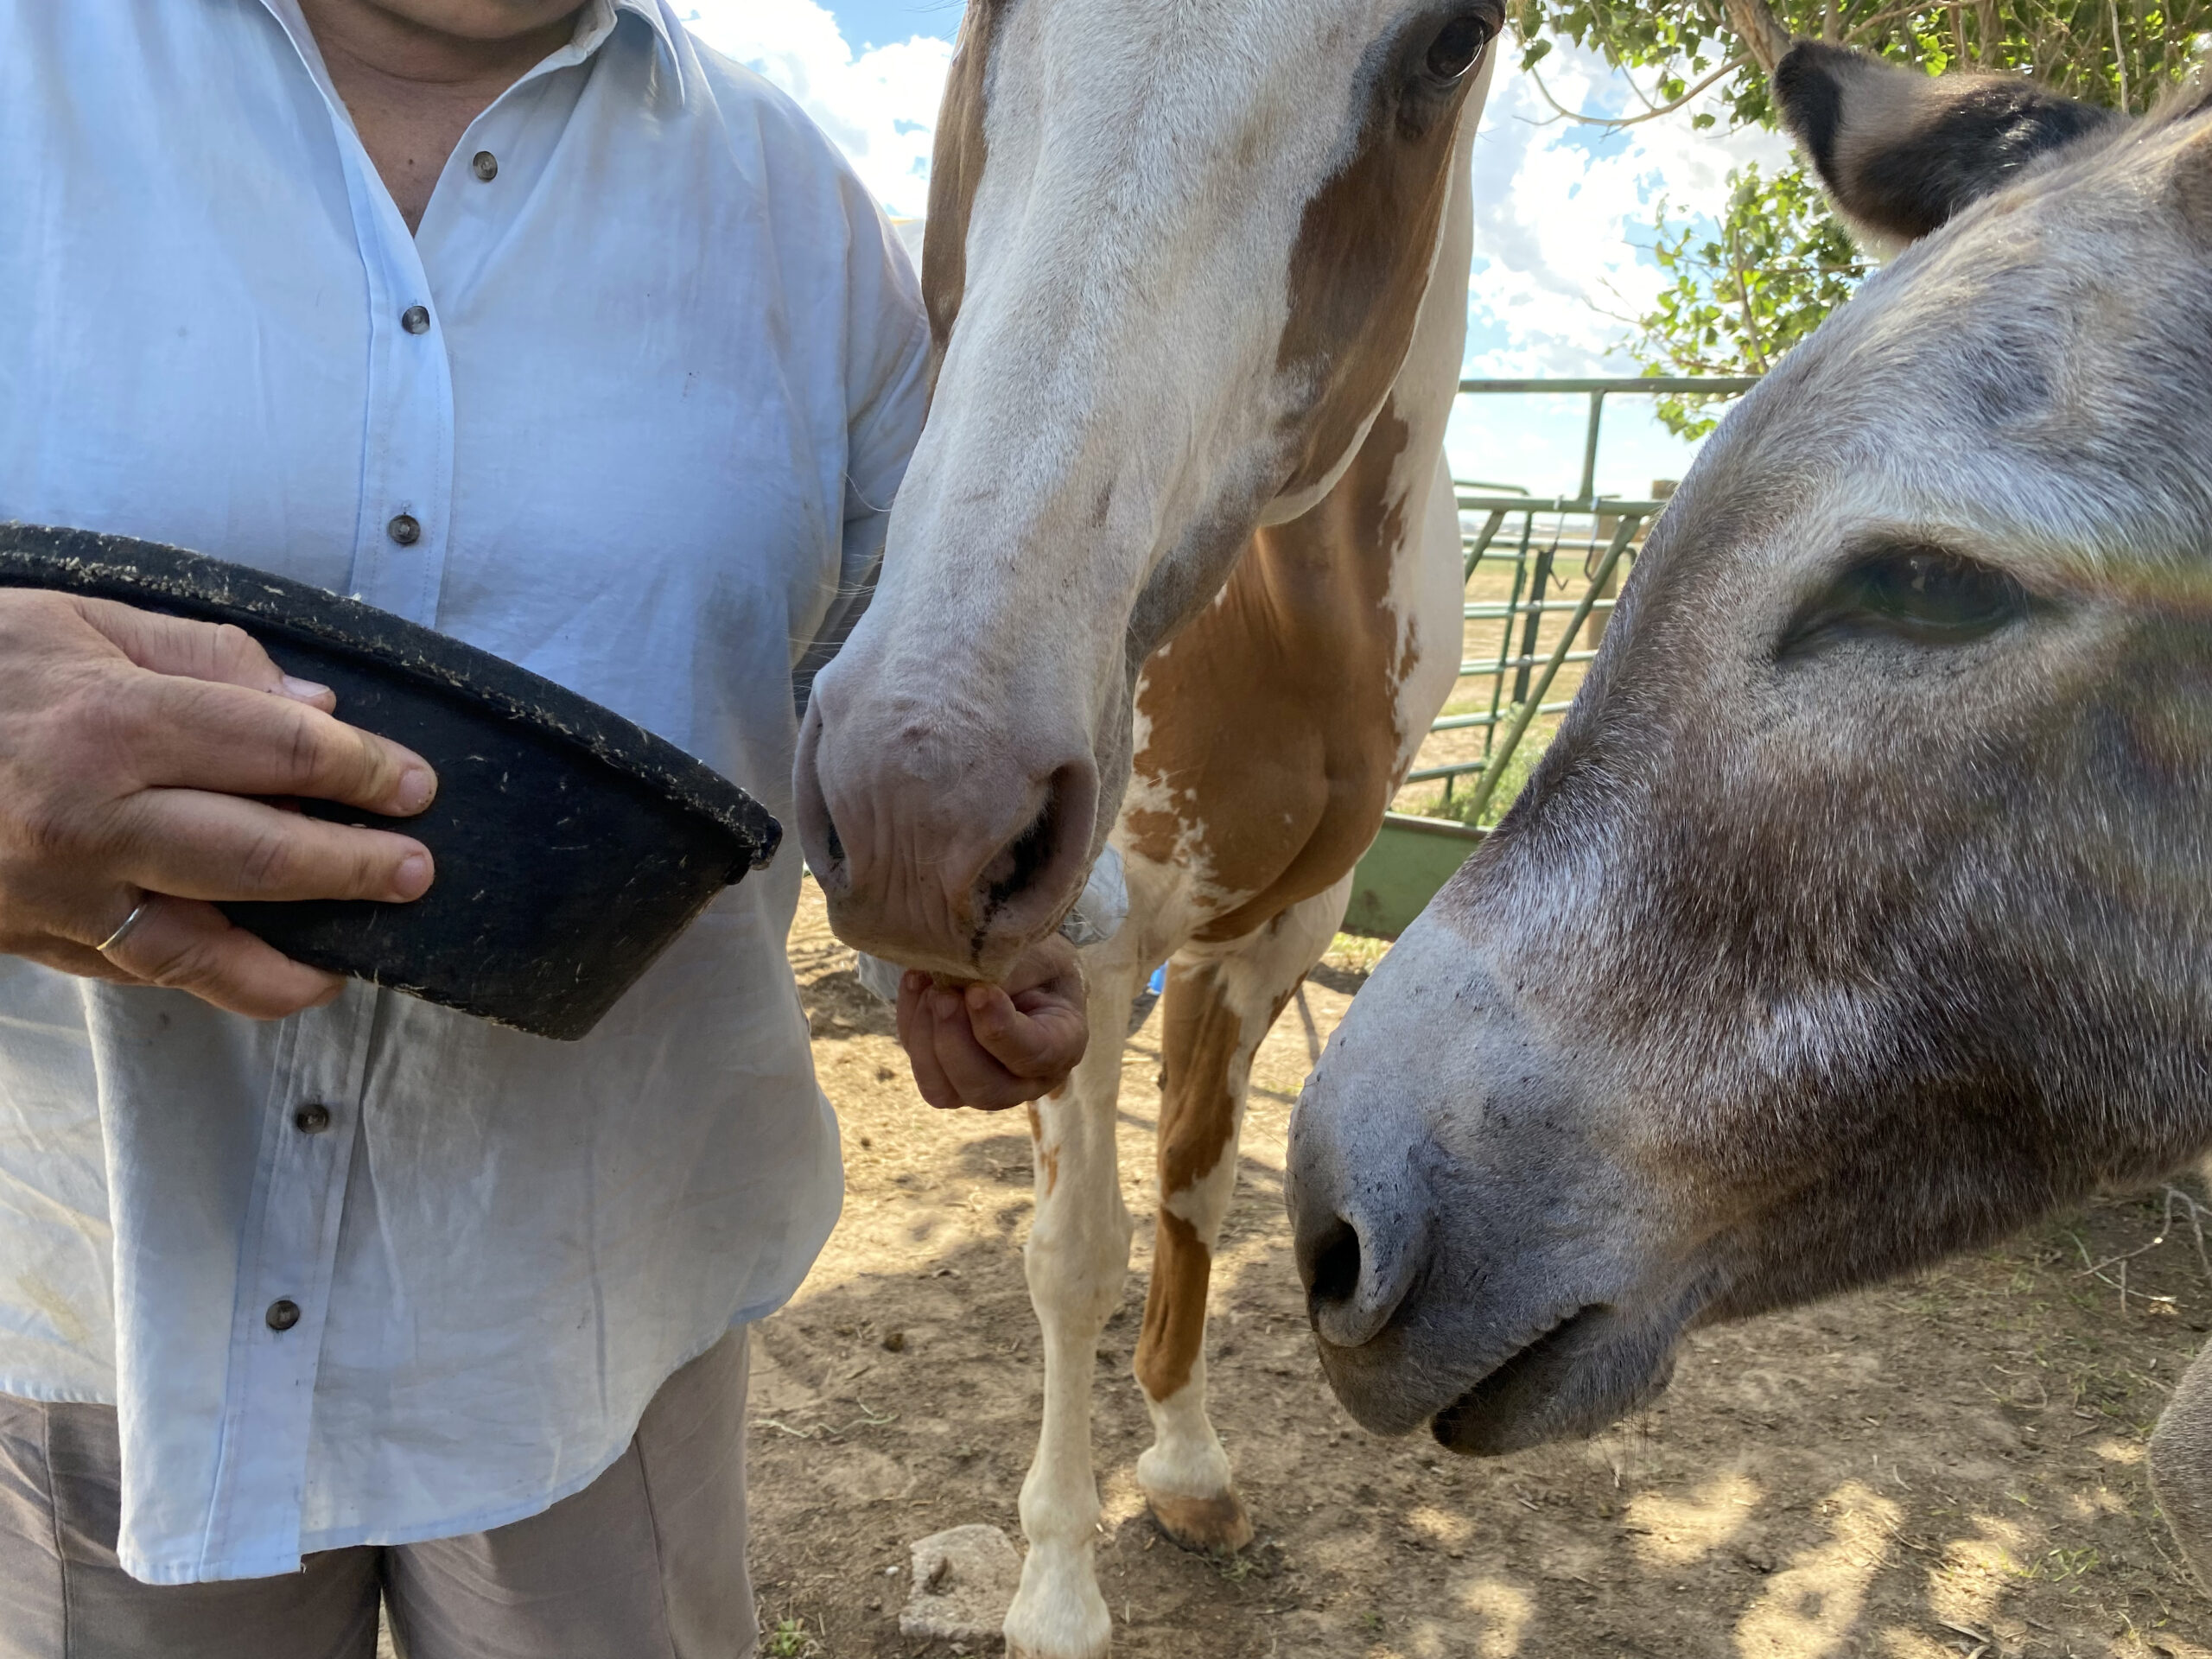 Hand of equine farmer feeding a horse and donkey.